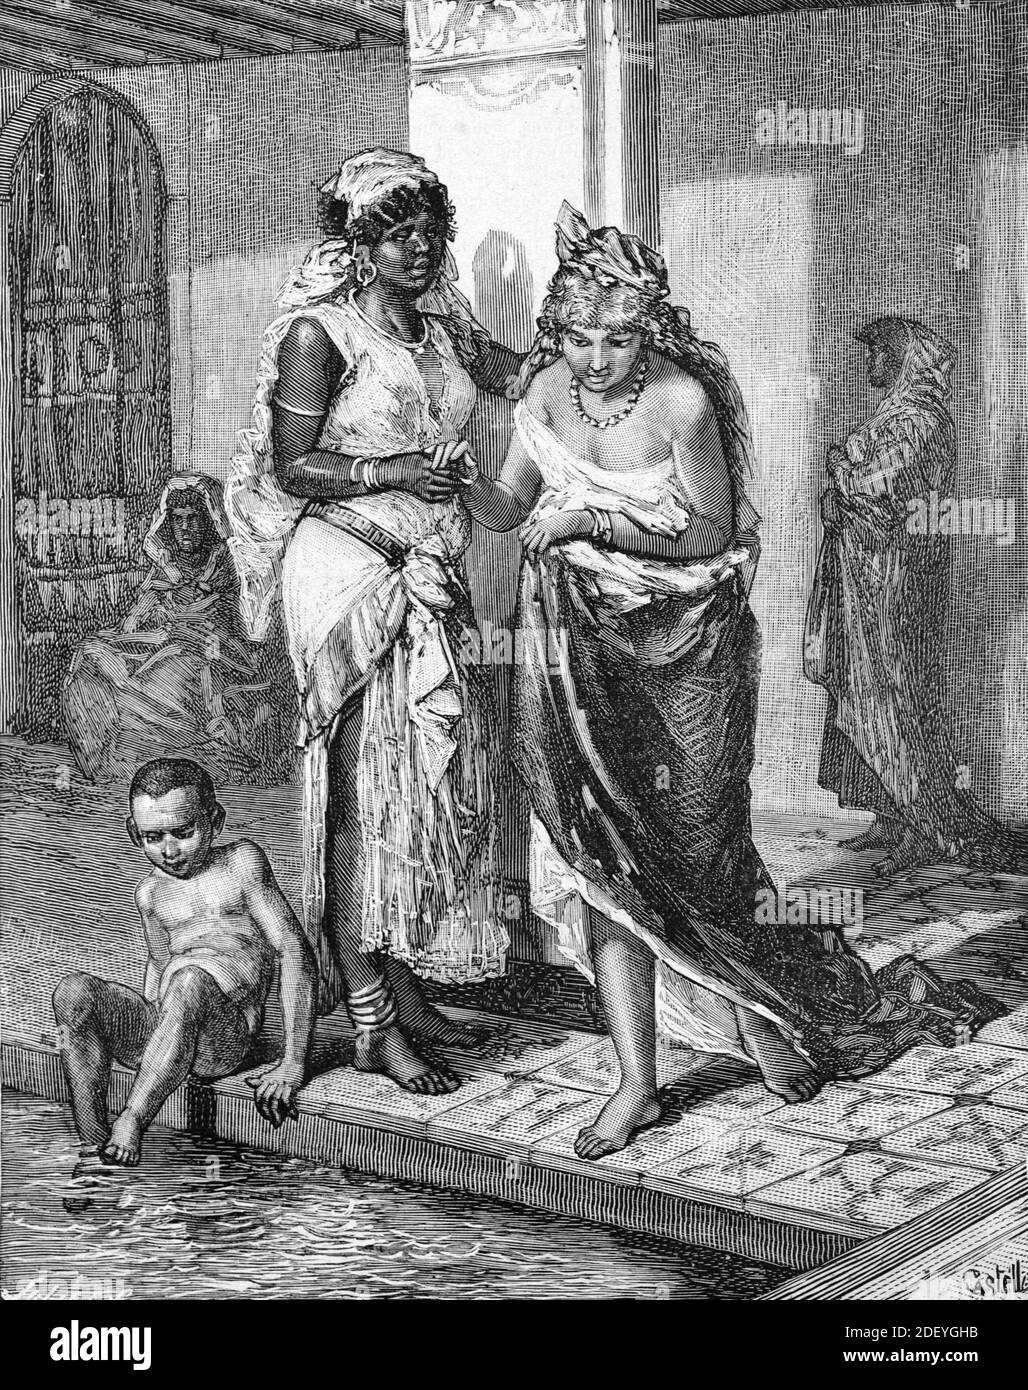 Moroccan Woman & African Maid or Slave in a Public Baths, Hammam, Hamam, Public Bathhouse or Turkish Baths Morocco (Engr Castelli, 1884) Vintage Engraving or Illustration Stock Photo